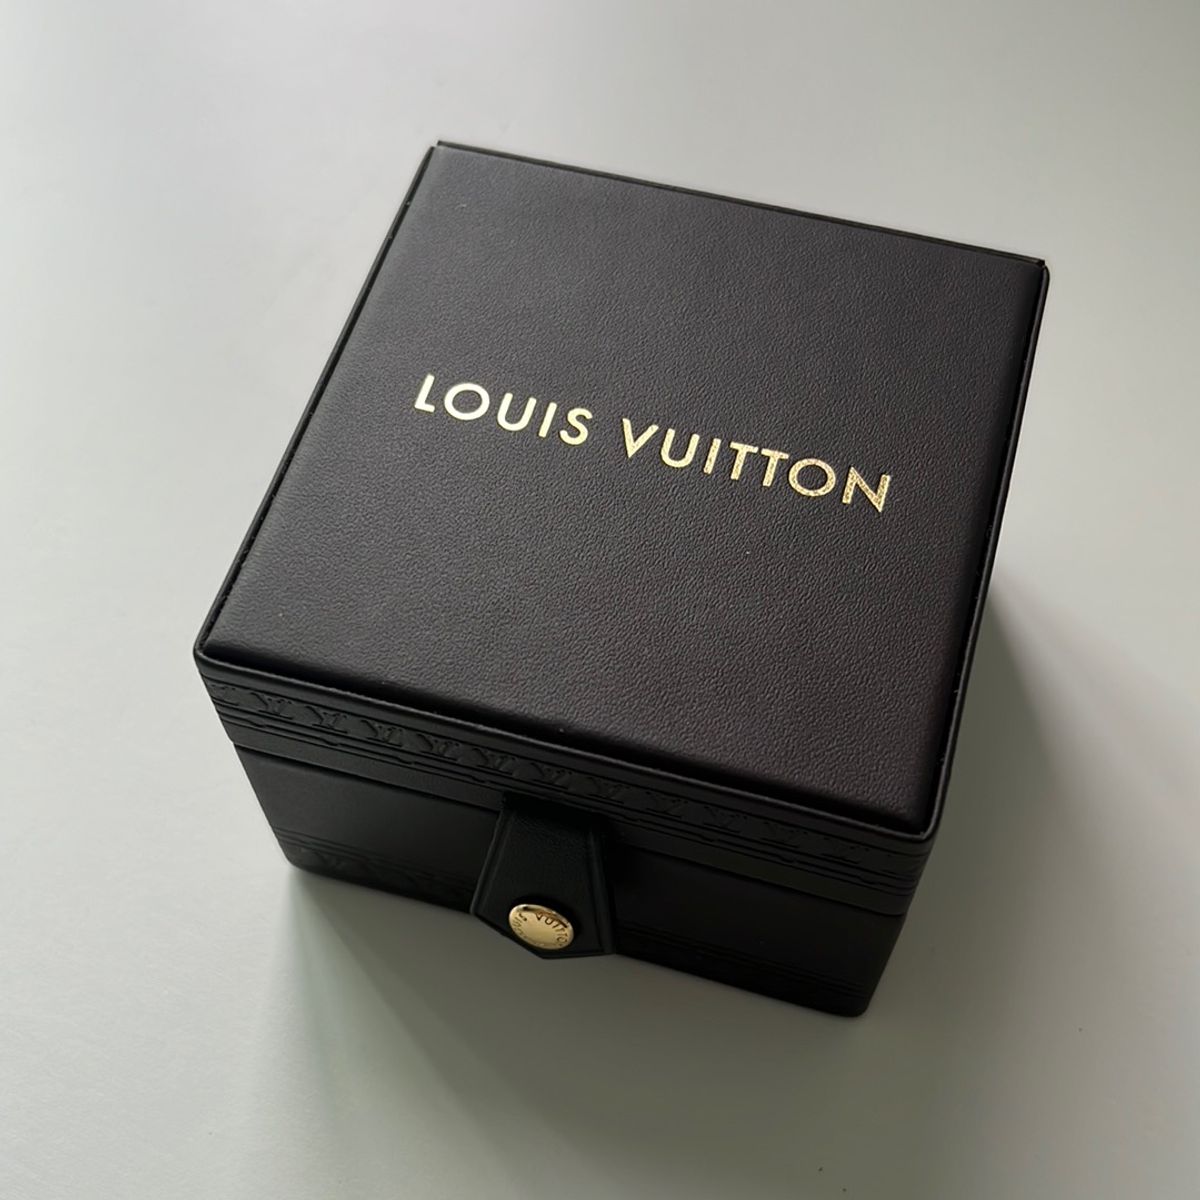 Porta Joias Original Louis Vuitton em Couro Marrom, Jóia Feminina Louis  Vuitton Usado 89842090